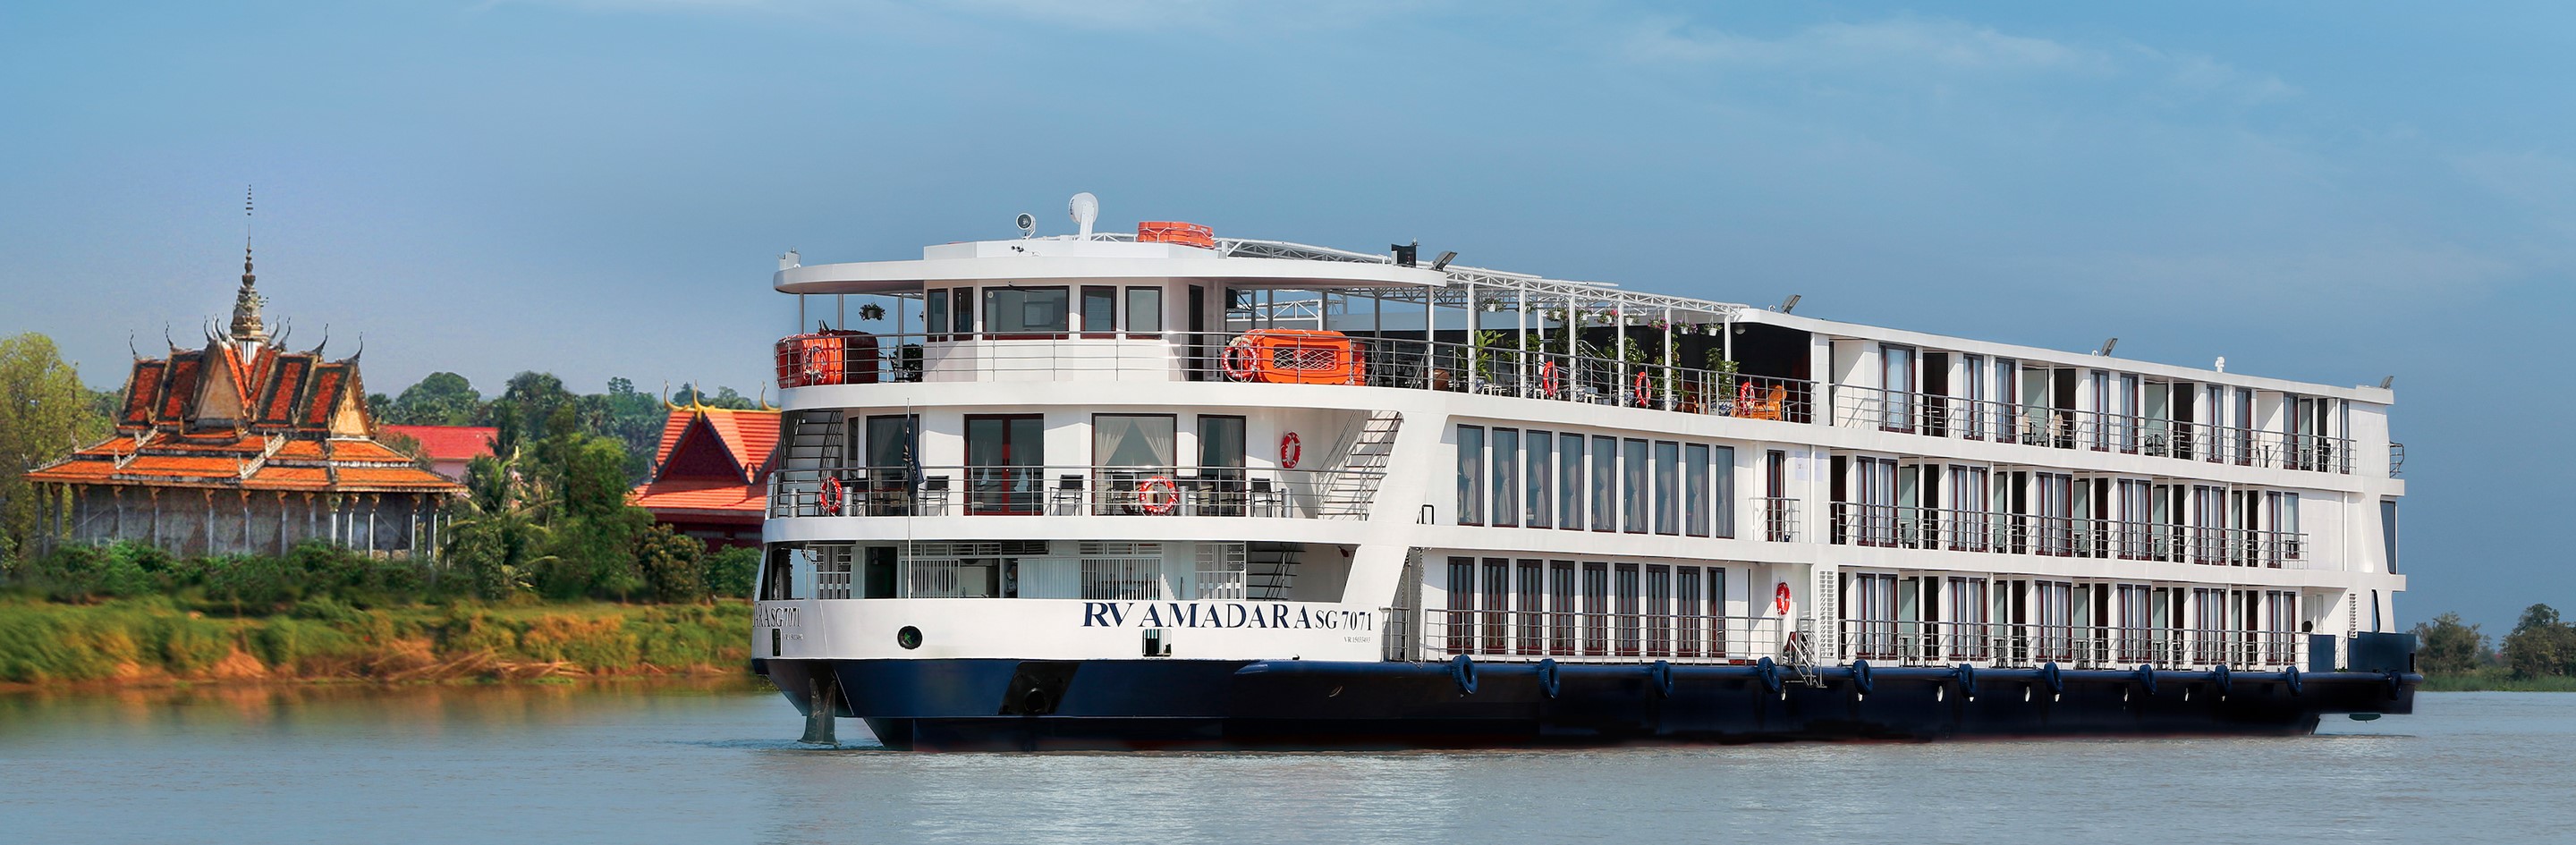 amadara river cruise vessel